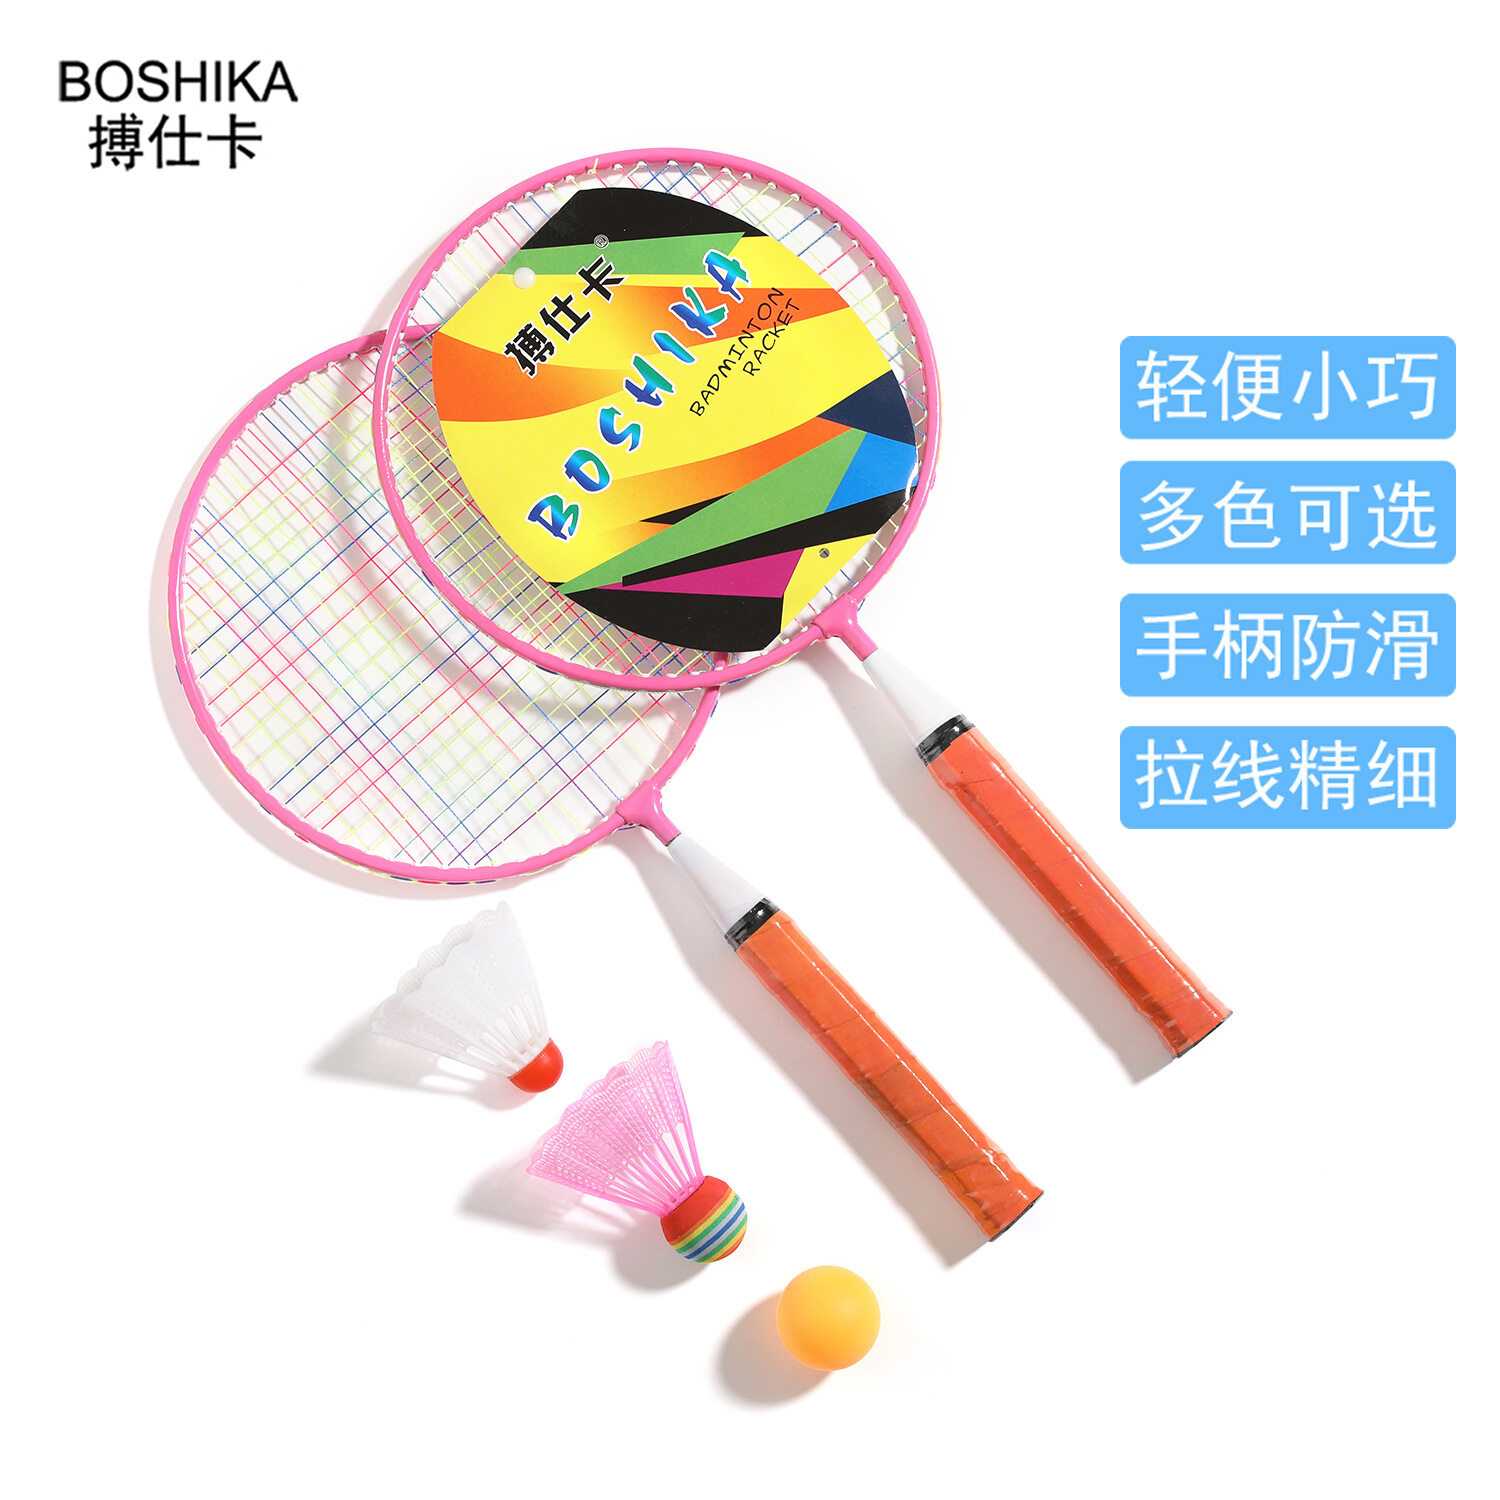 Children's badminton racket use-sporting goods, outdoor entertainment,  cartoon set, generation toys | Lazada